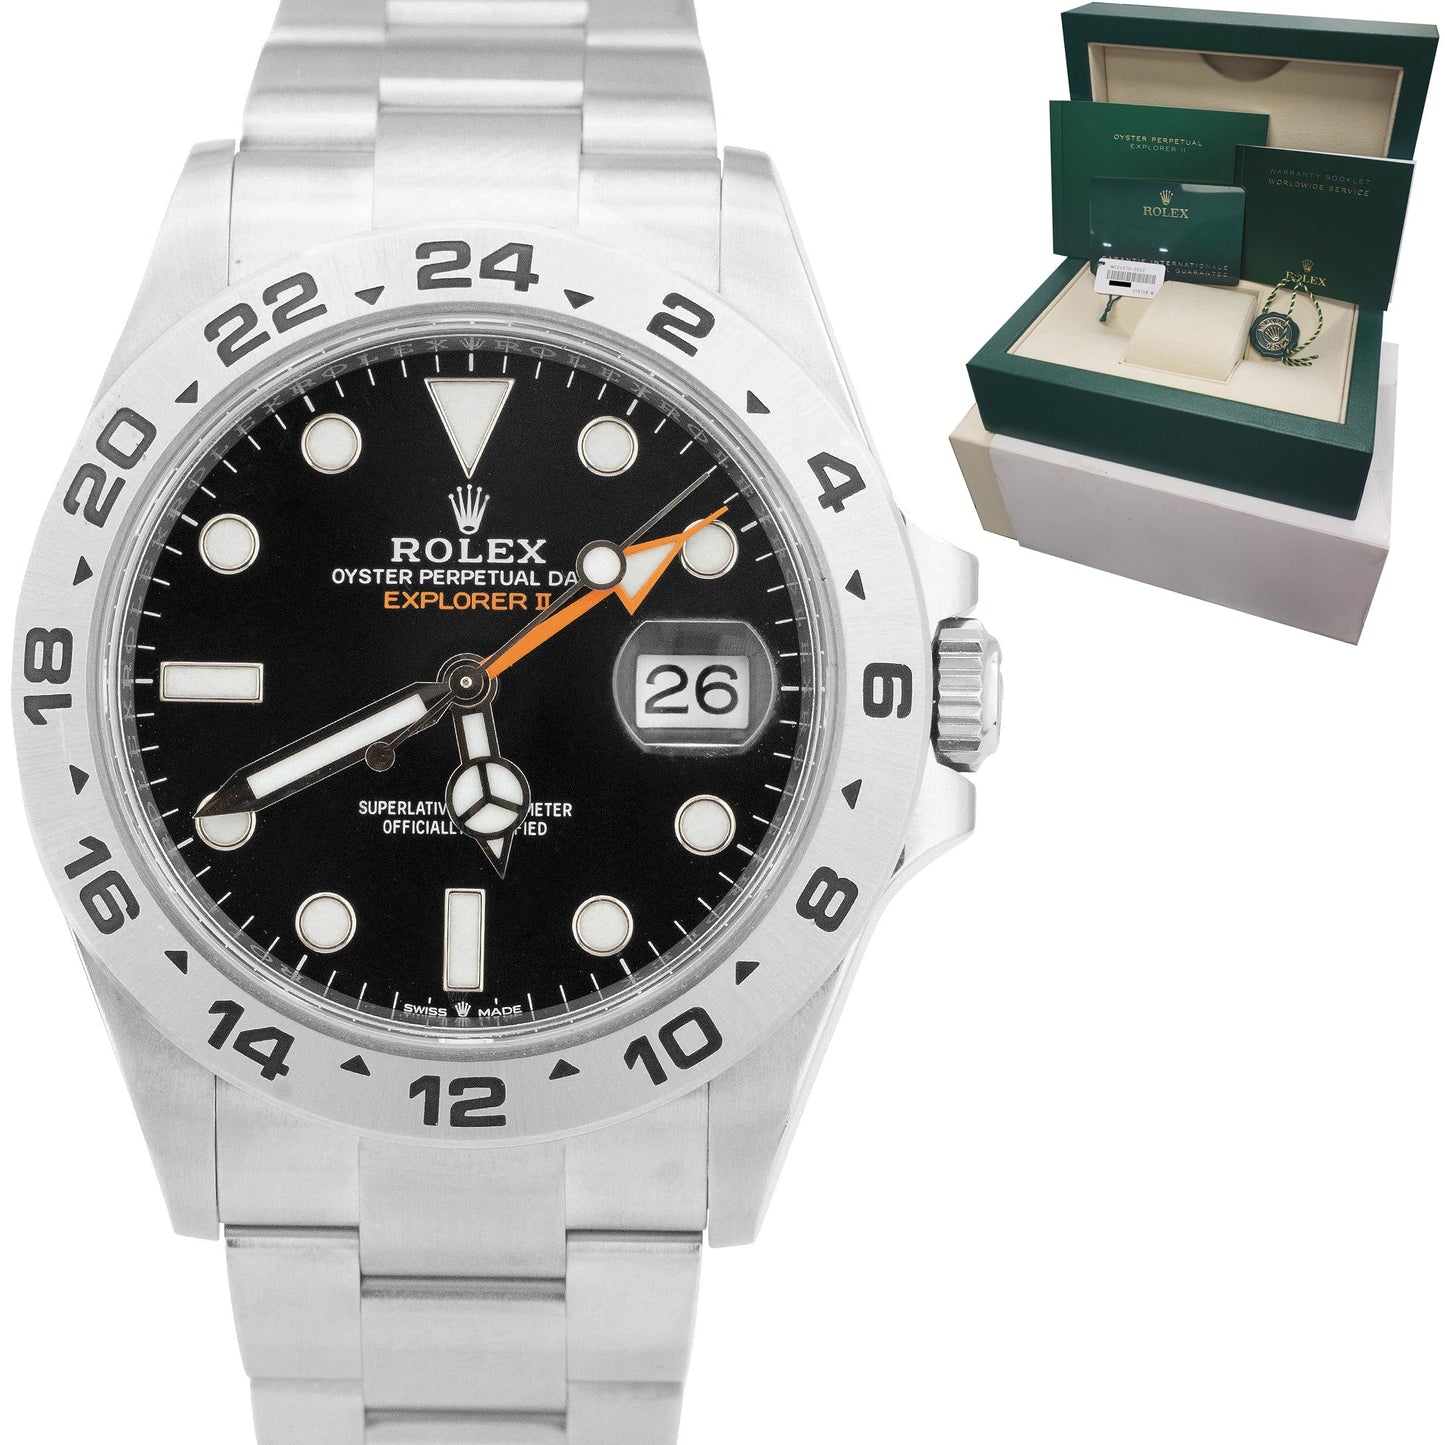 NEW AUG 2022 Rolex Explorer II 42mm Black Orange Stainless GMT Date Watch 226570